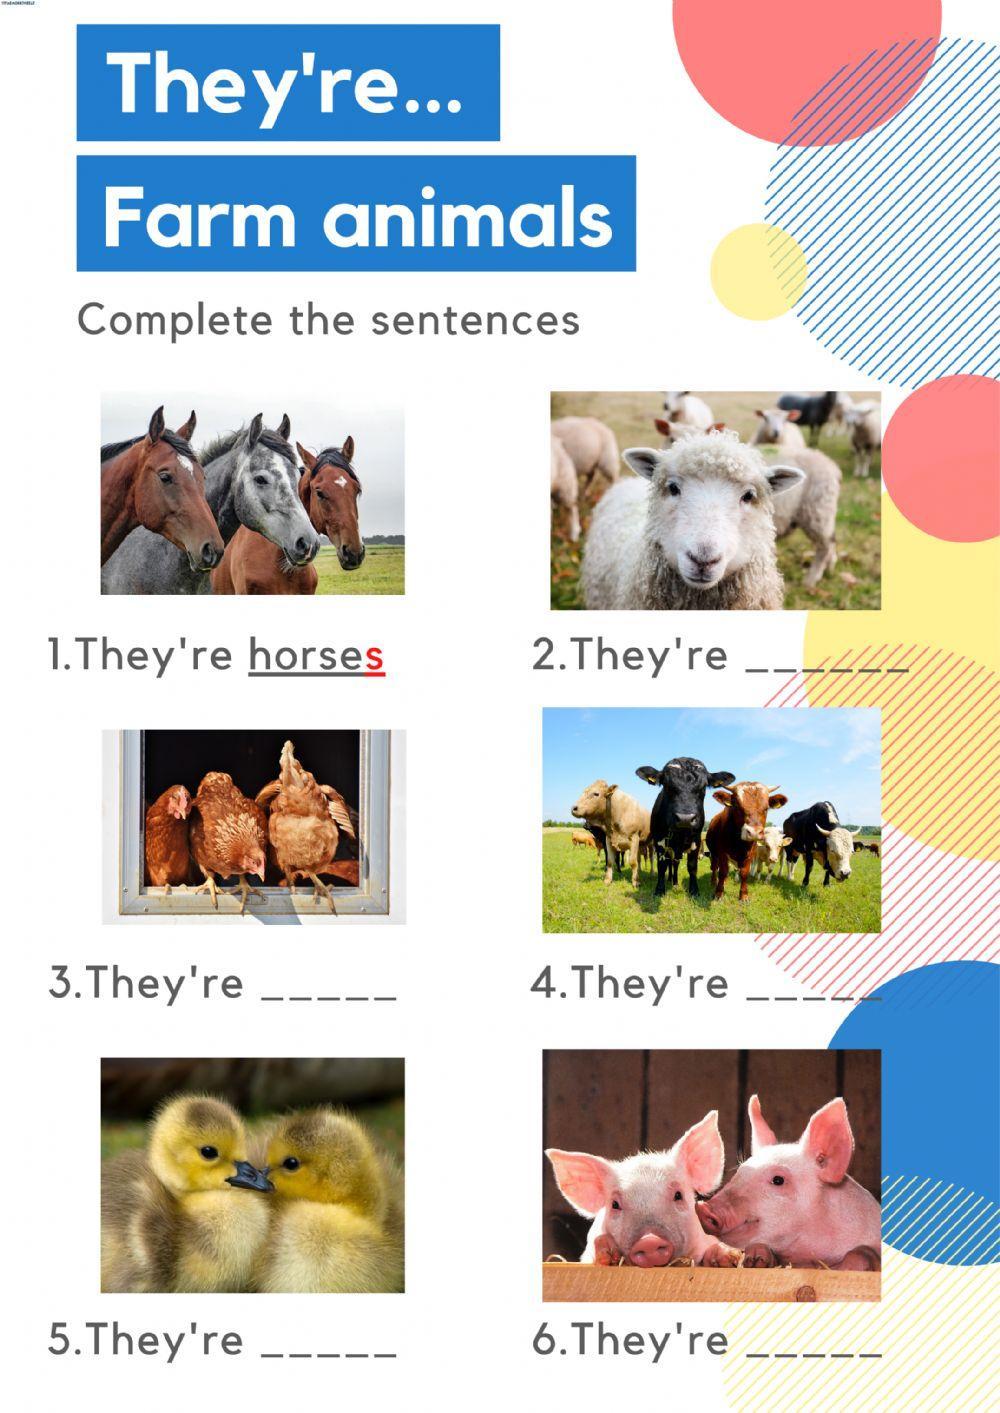 They're - Farm animals